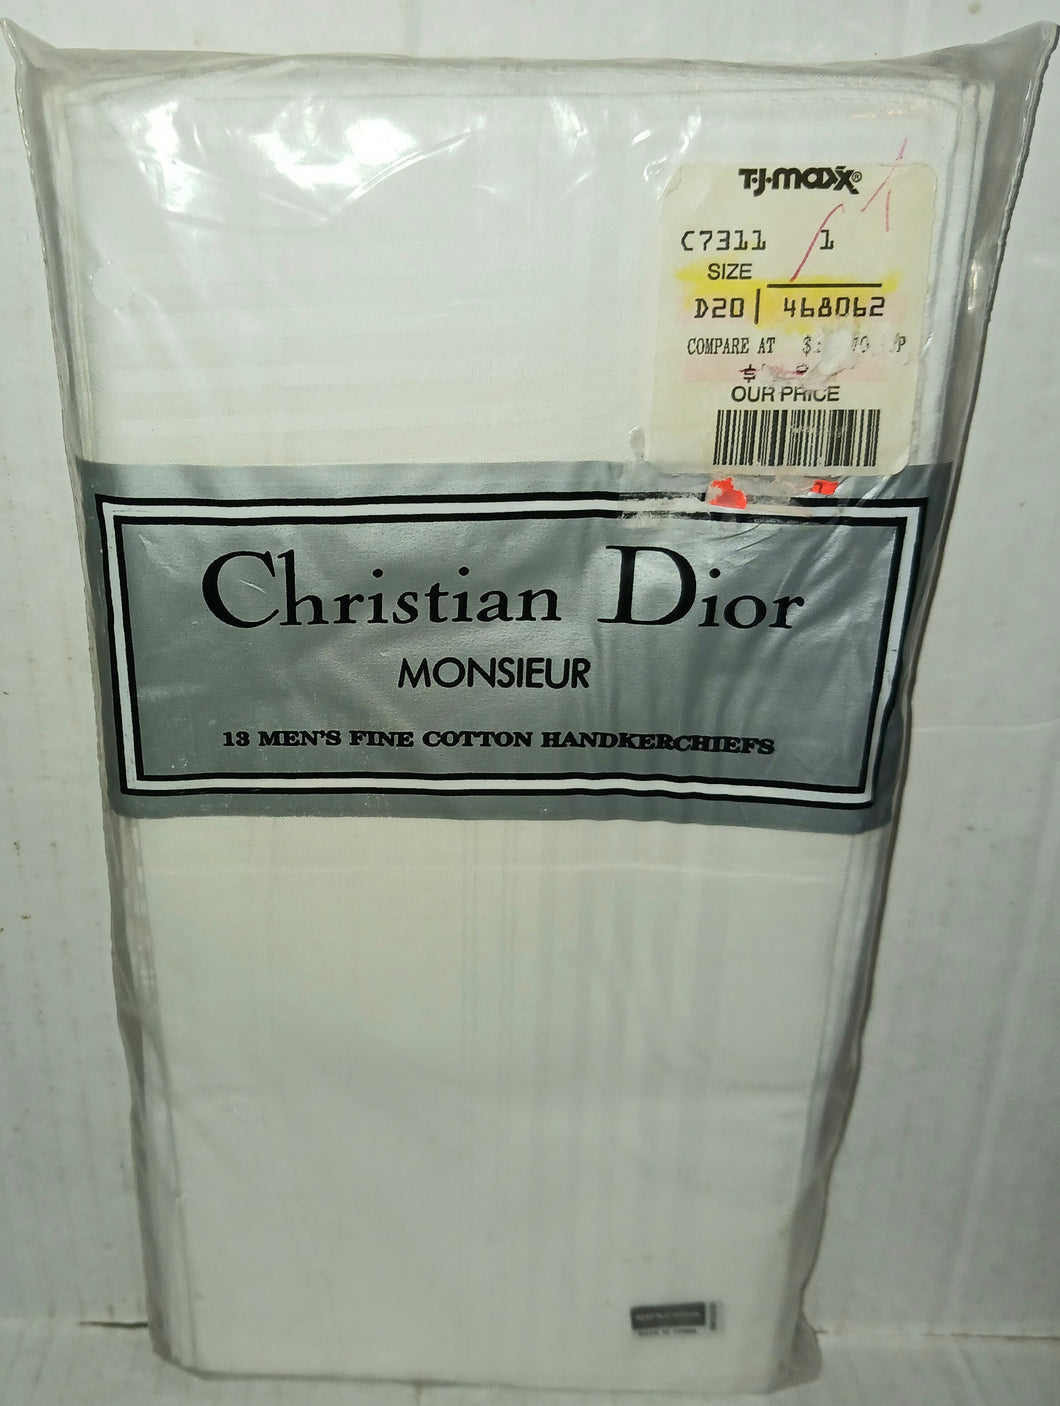 Christian Dior Monsieur Men's Vintage Handkerchiefs NWT New 13 Pack Solid White Cotton RN 15200